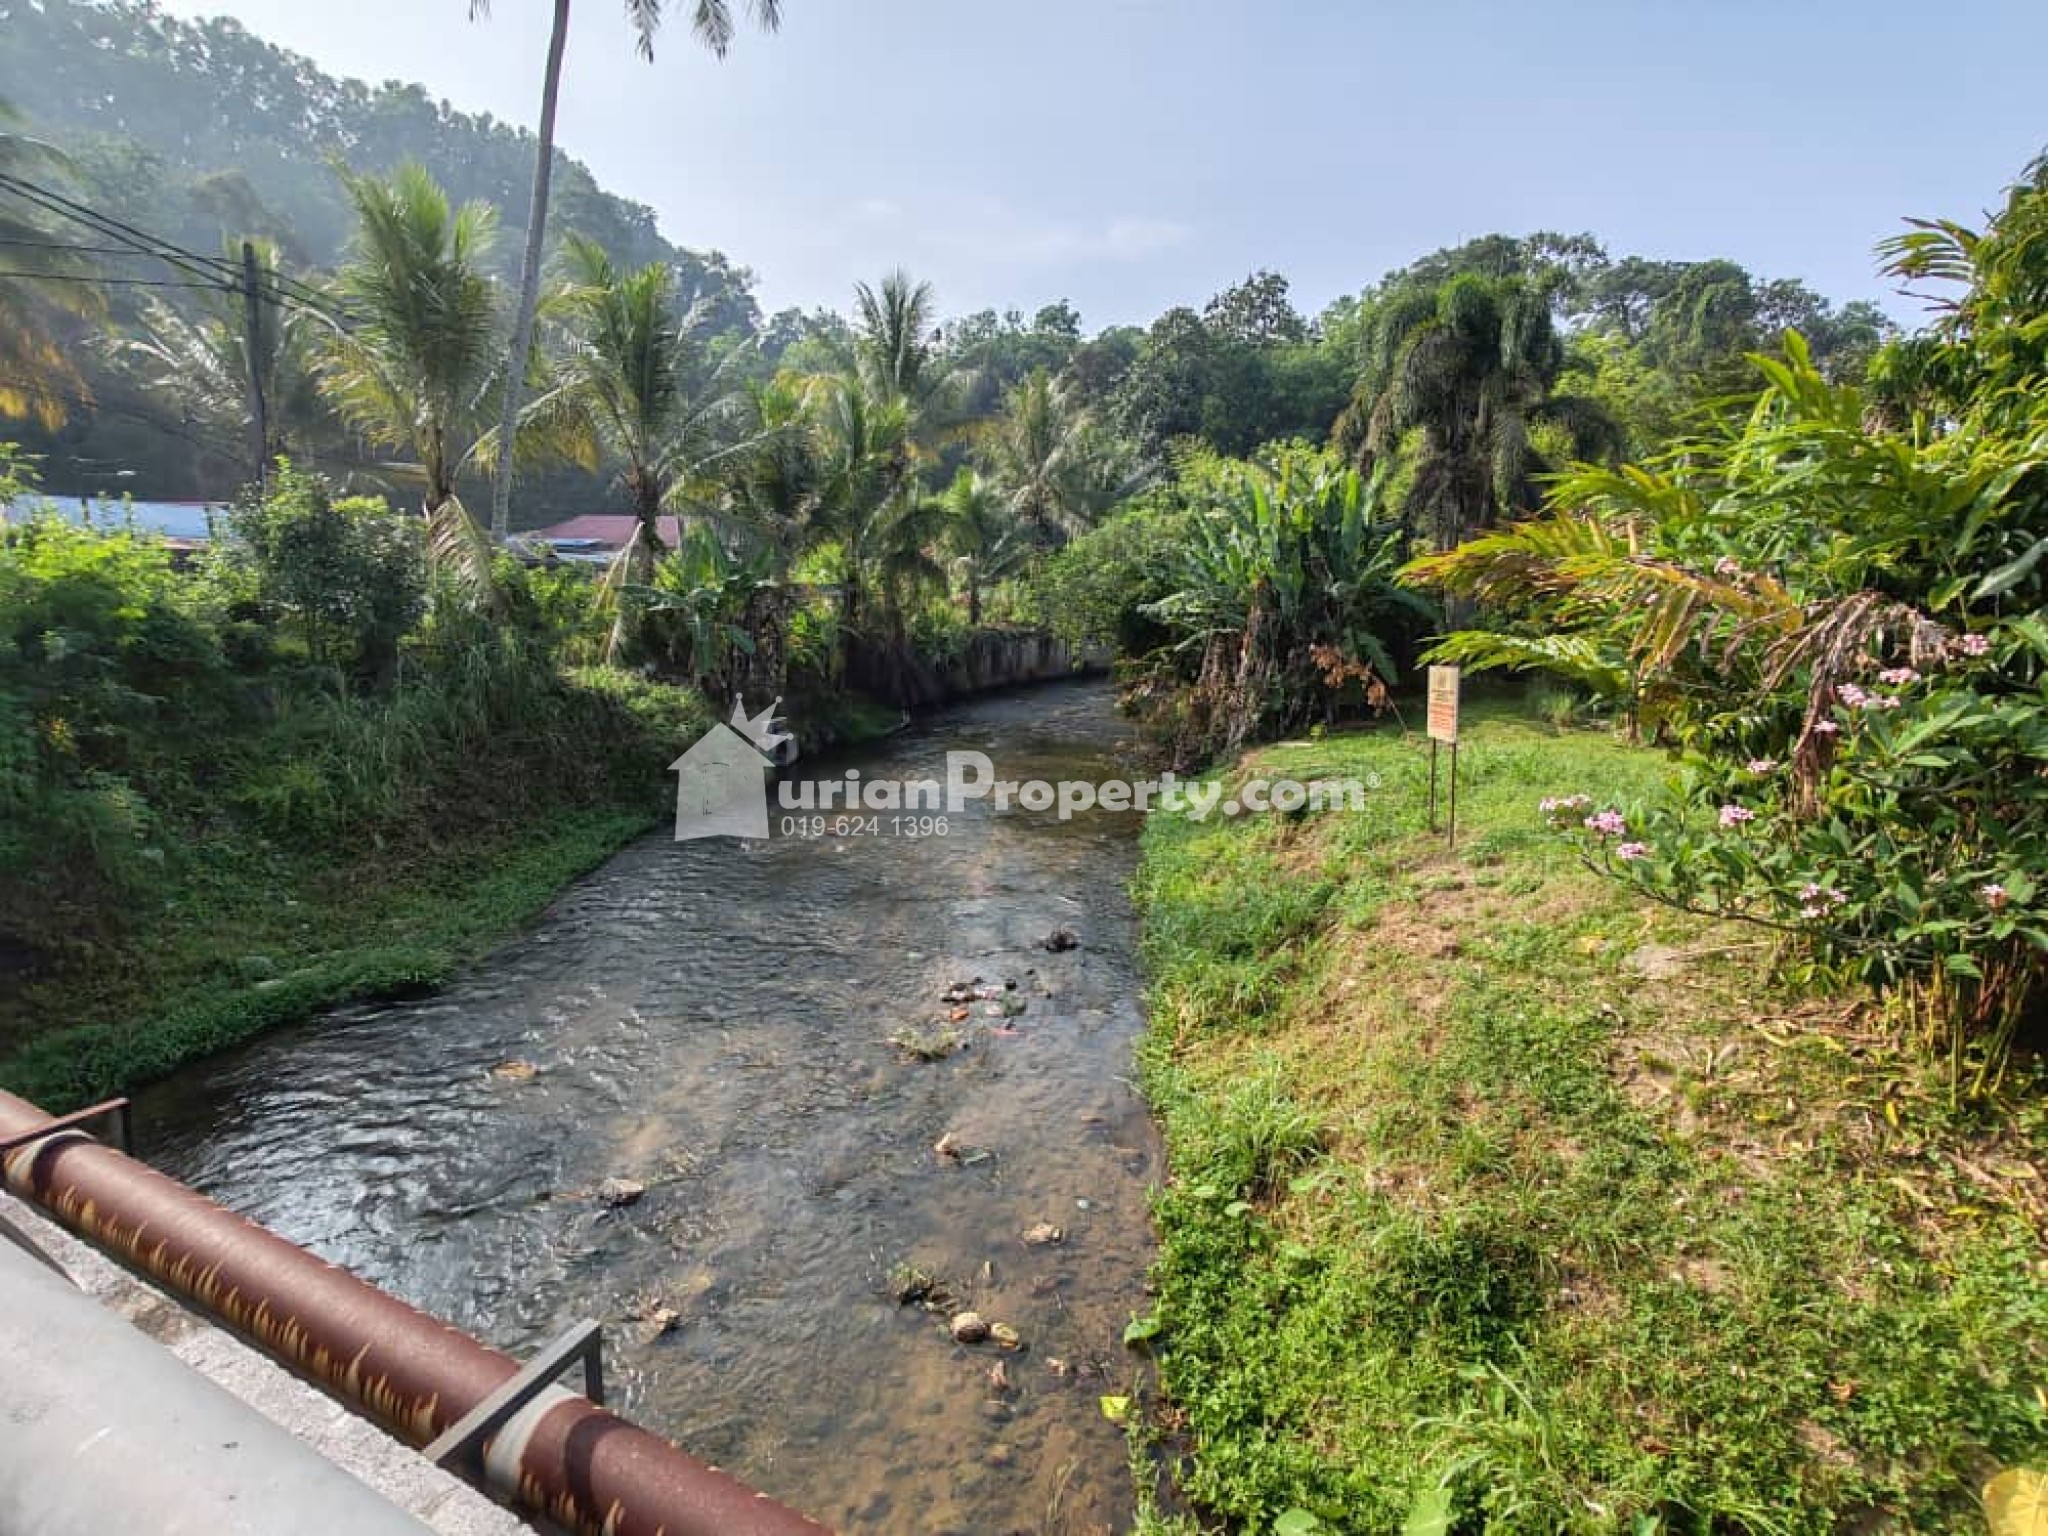 Residential Land For Sale at Taman Permai Jaya